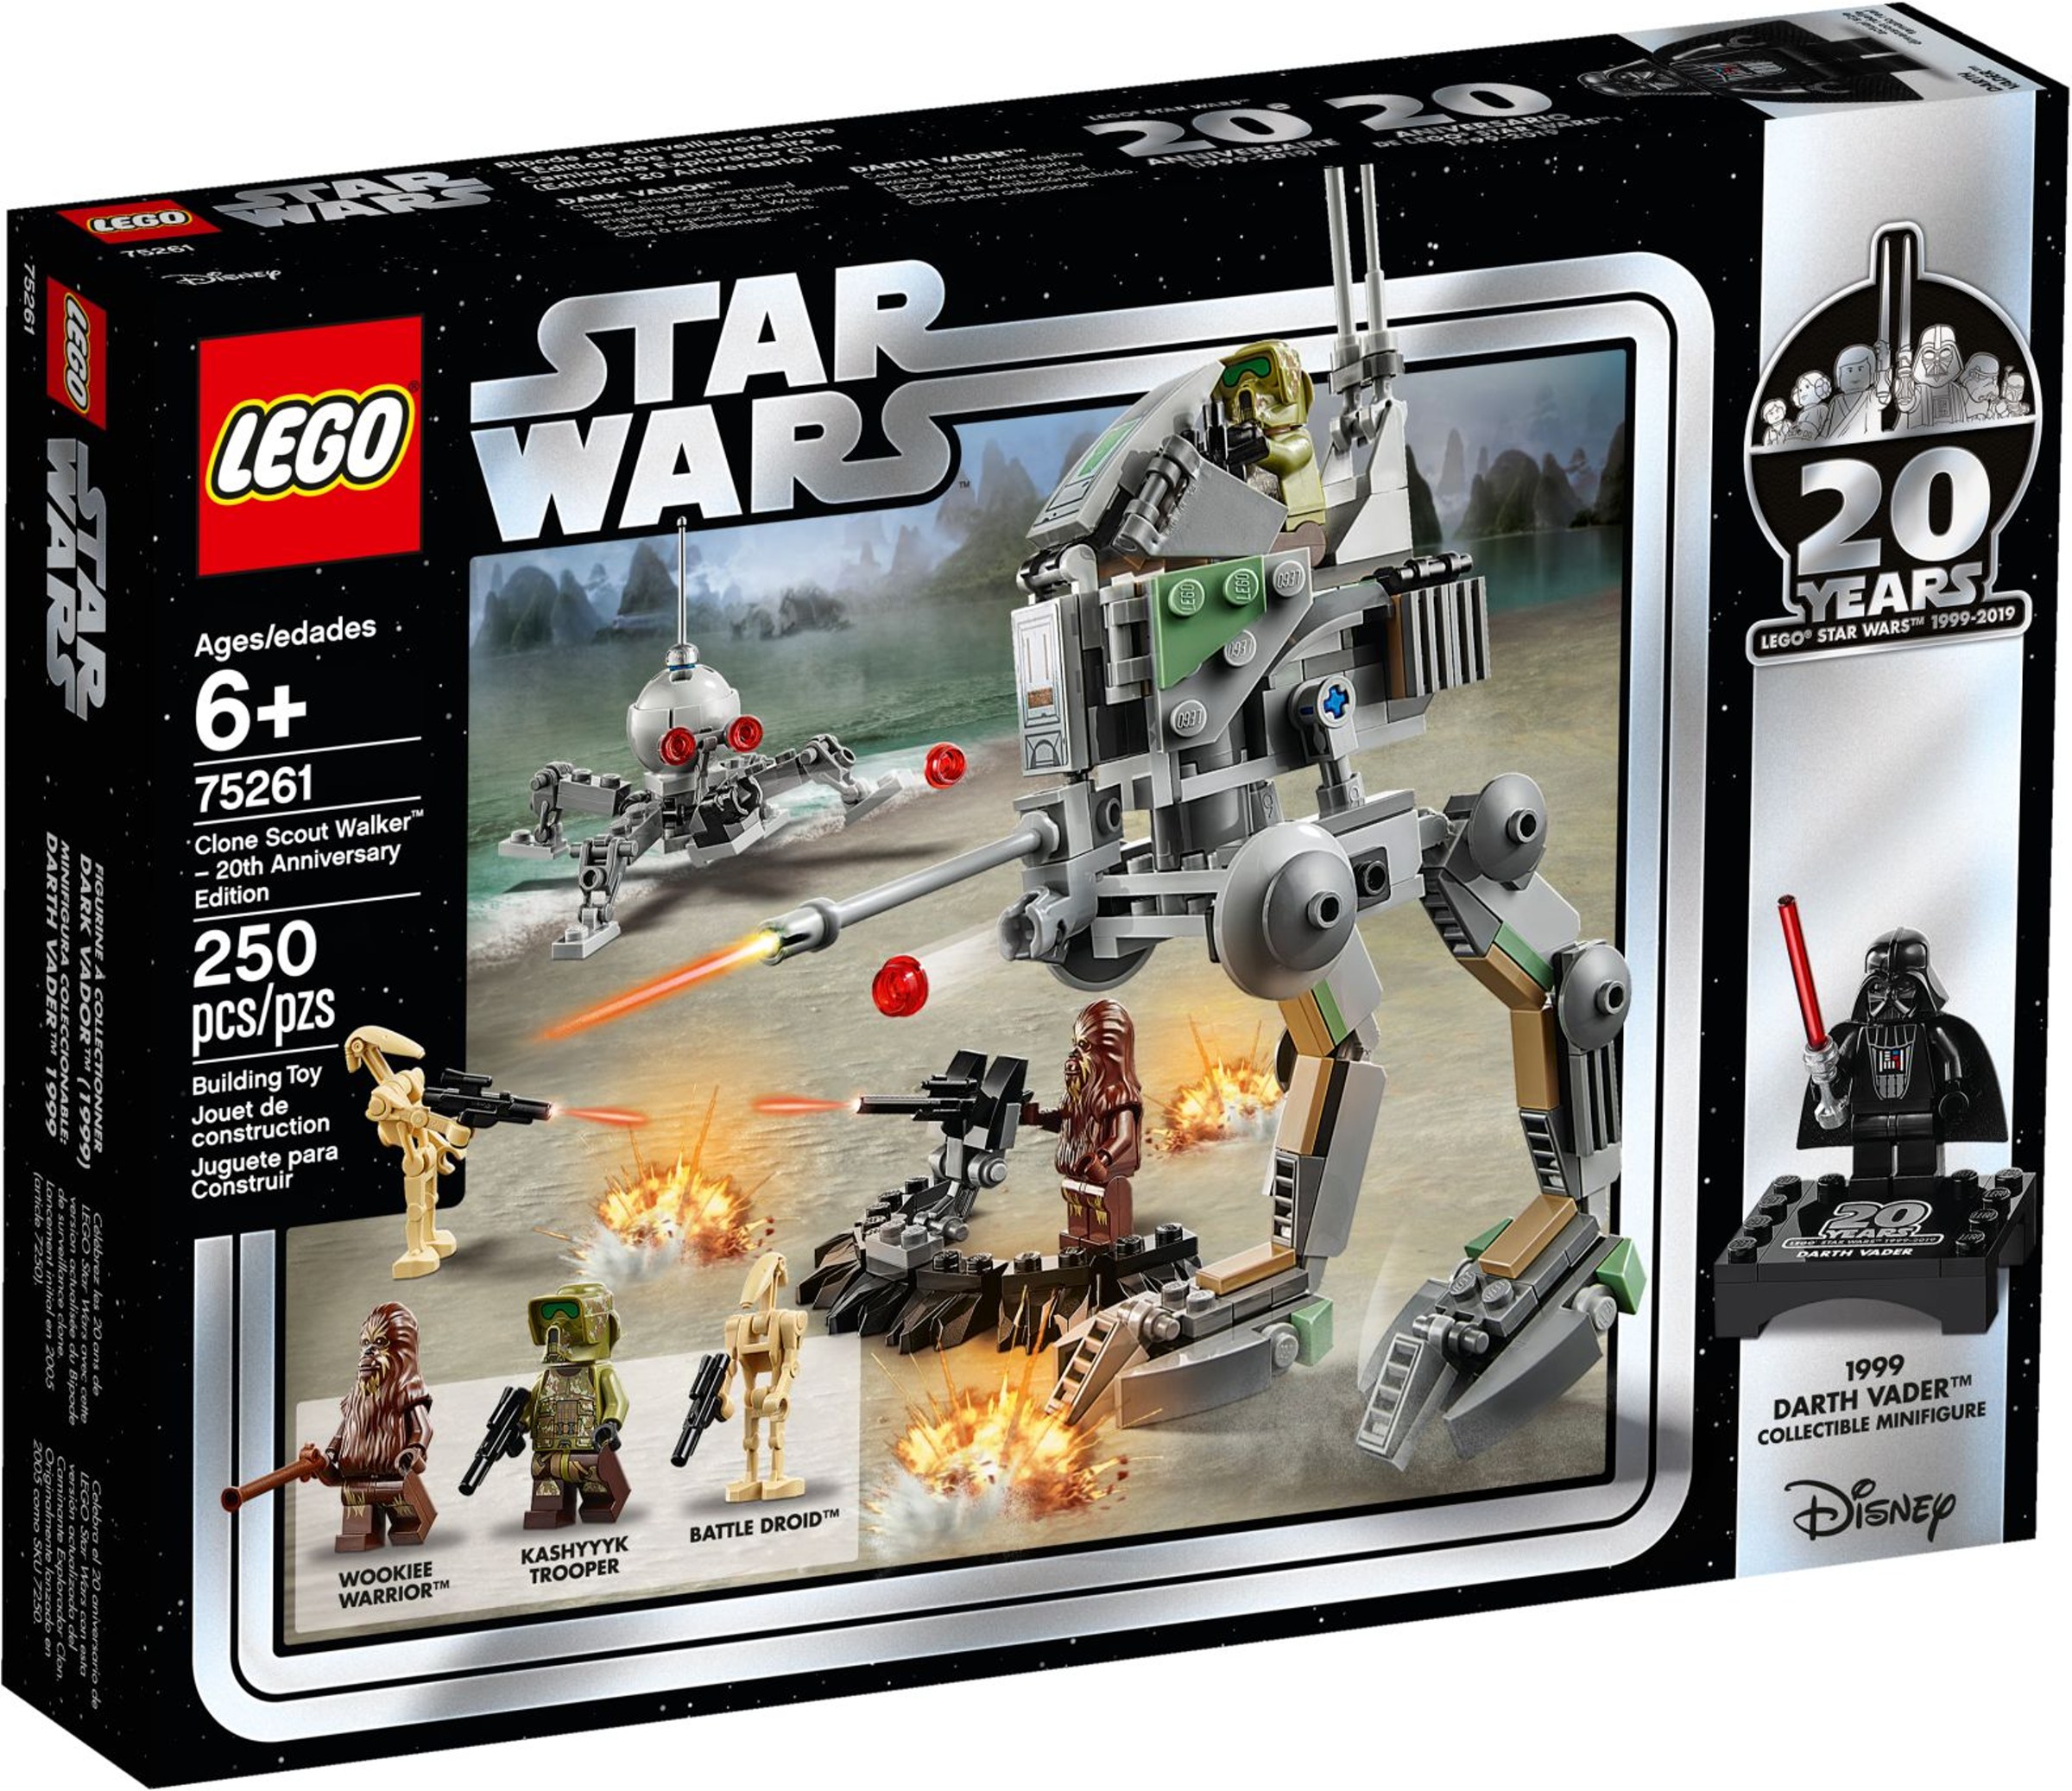 lego star wars droid gunship 75233